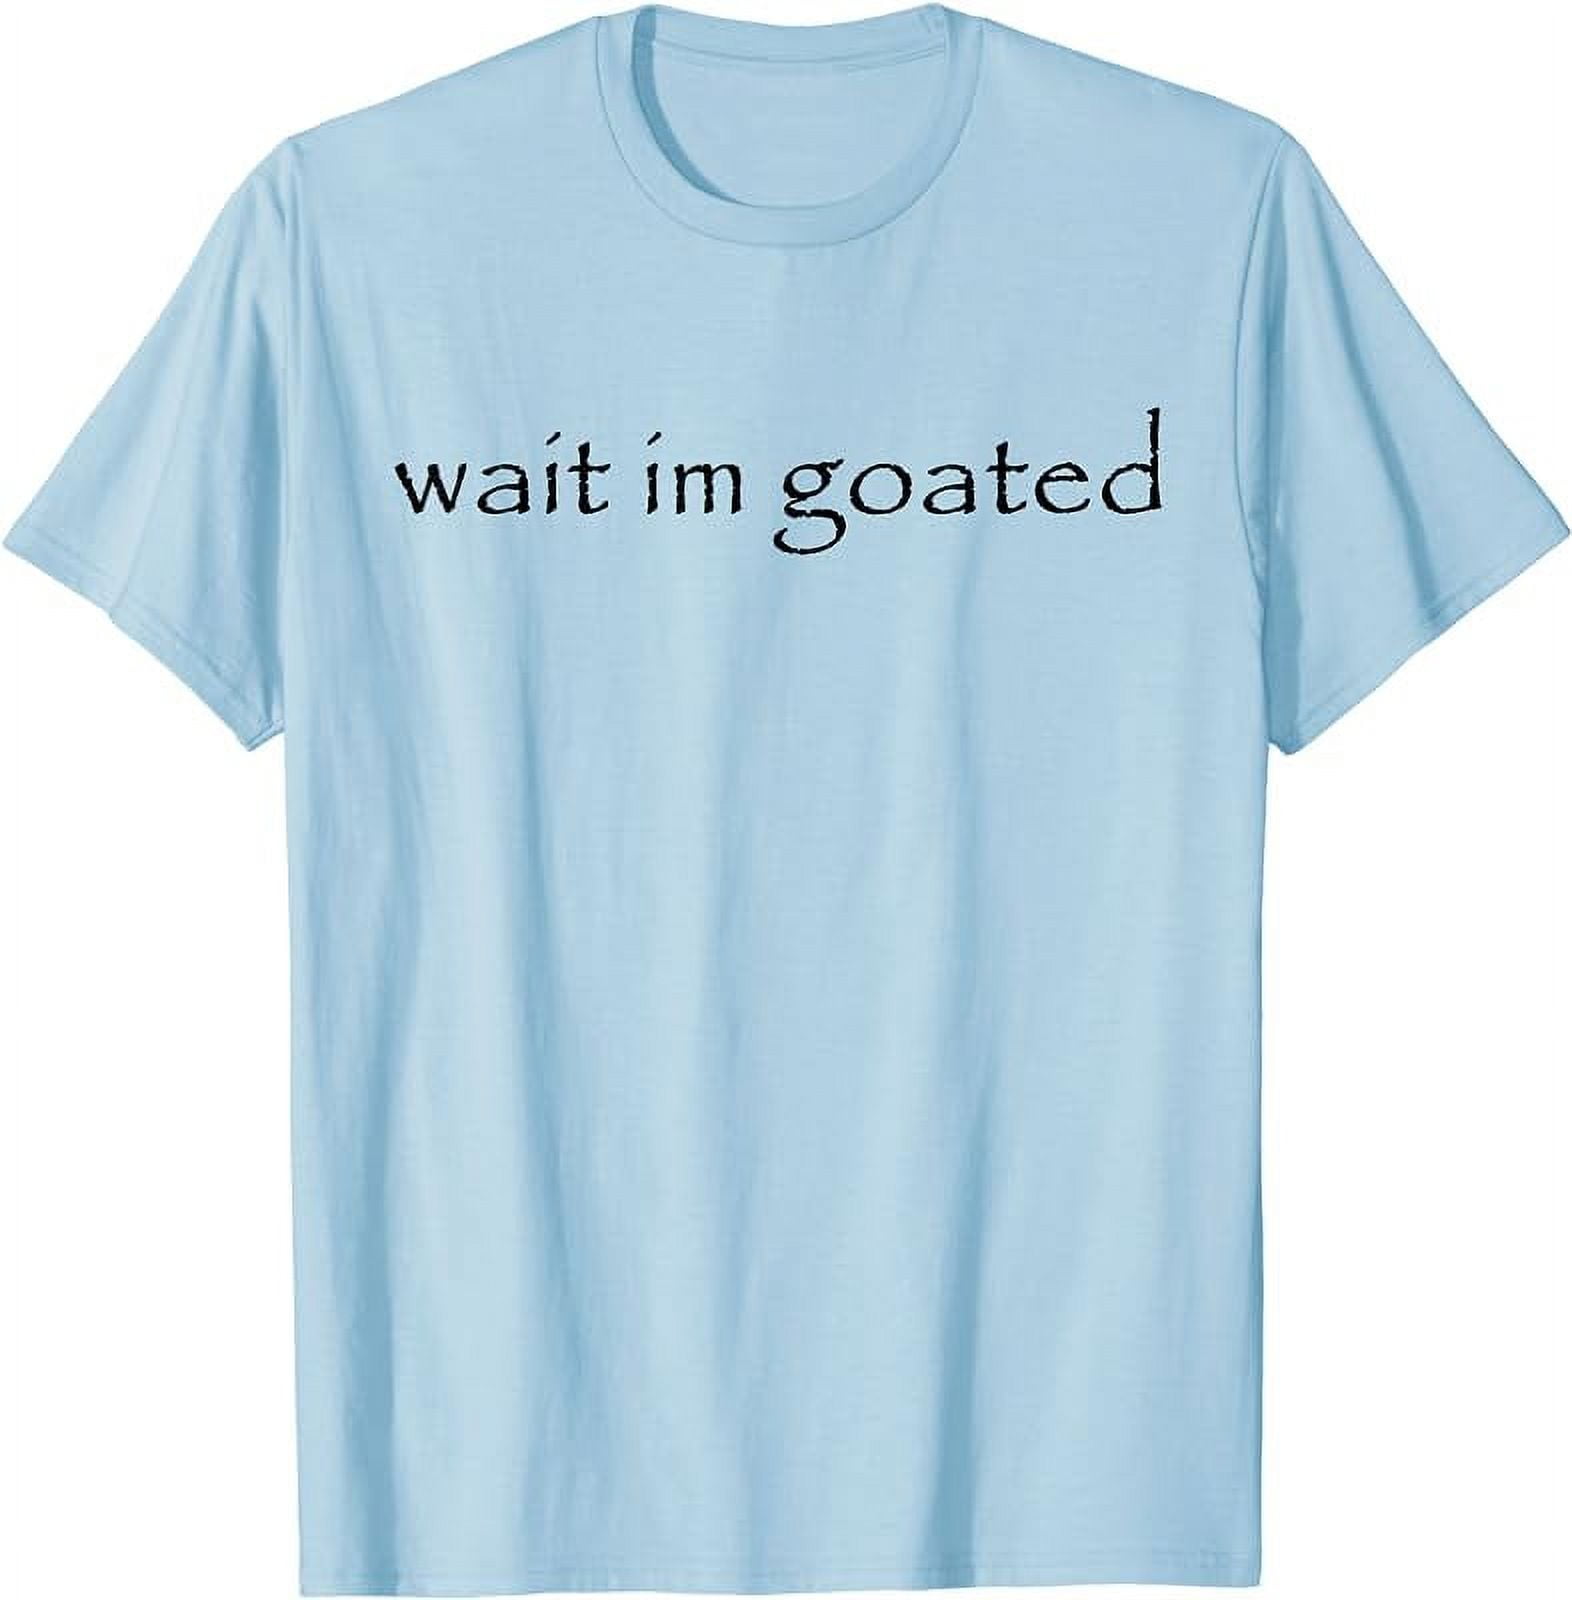 Wait I'm Goated Funny Meme T-Shirt 